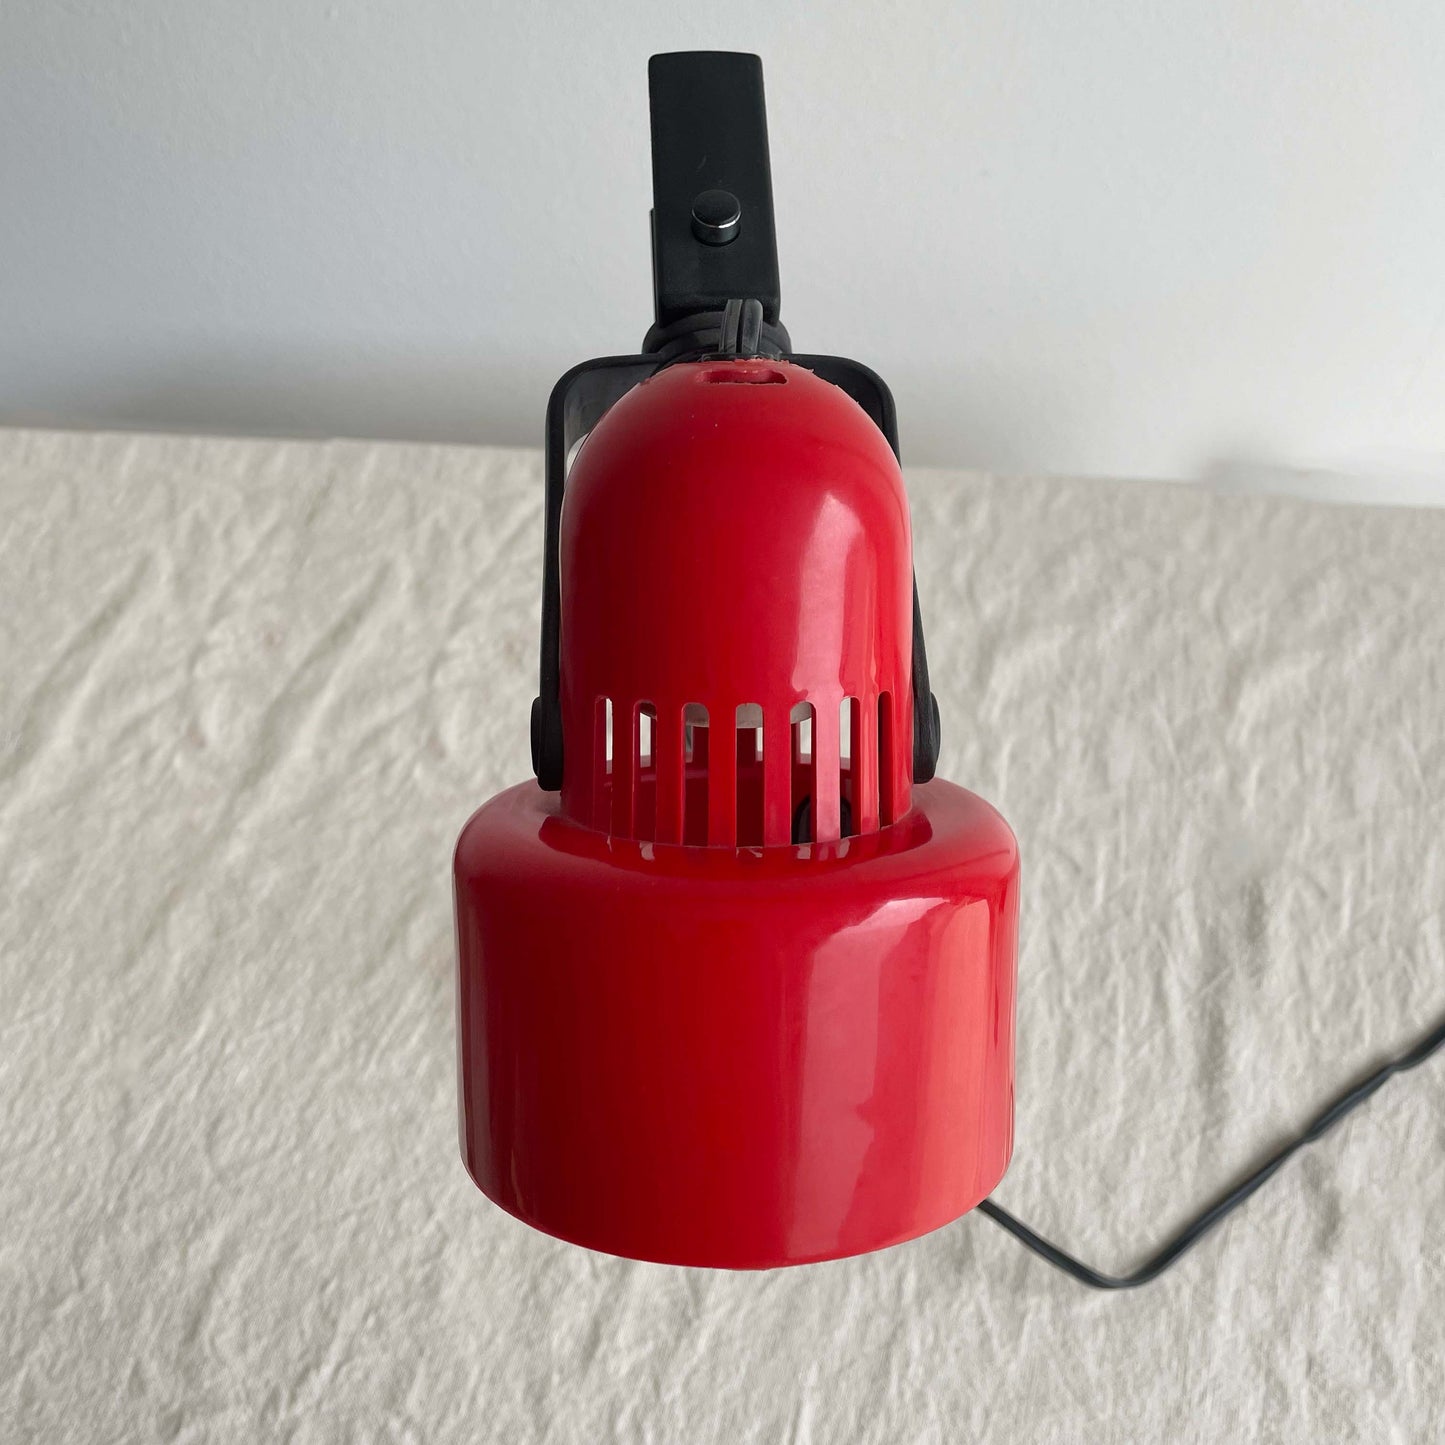 Fagerhult Style Adjustable Desk Task Lamp